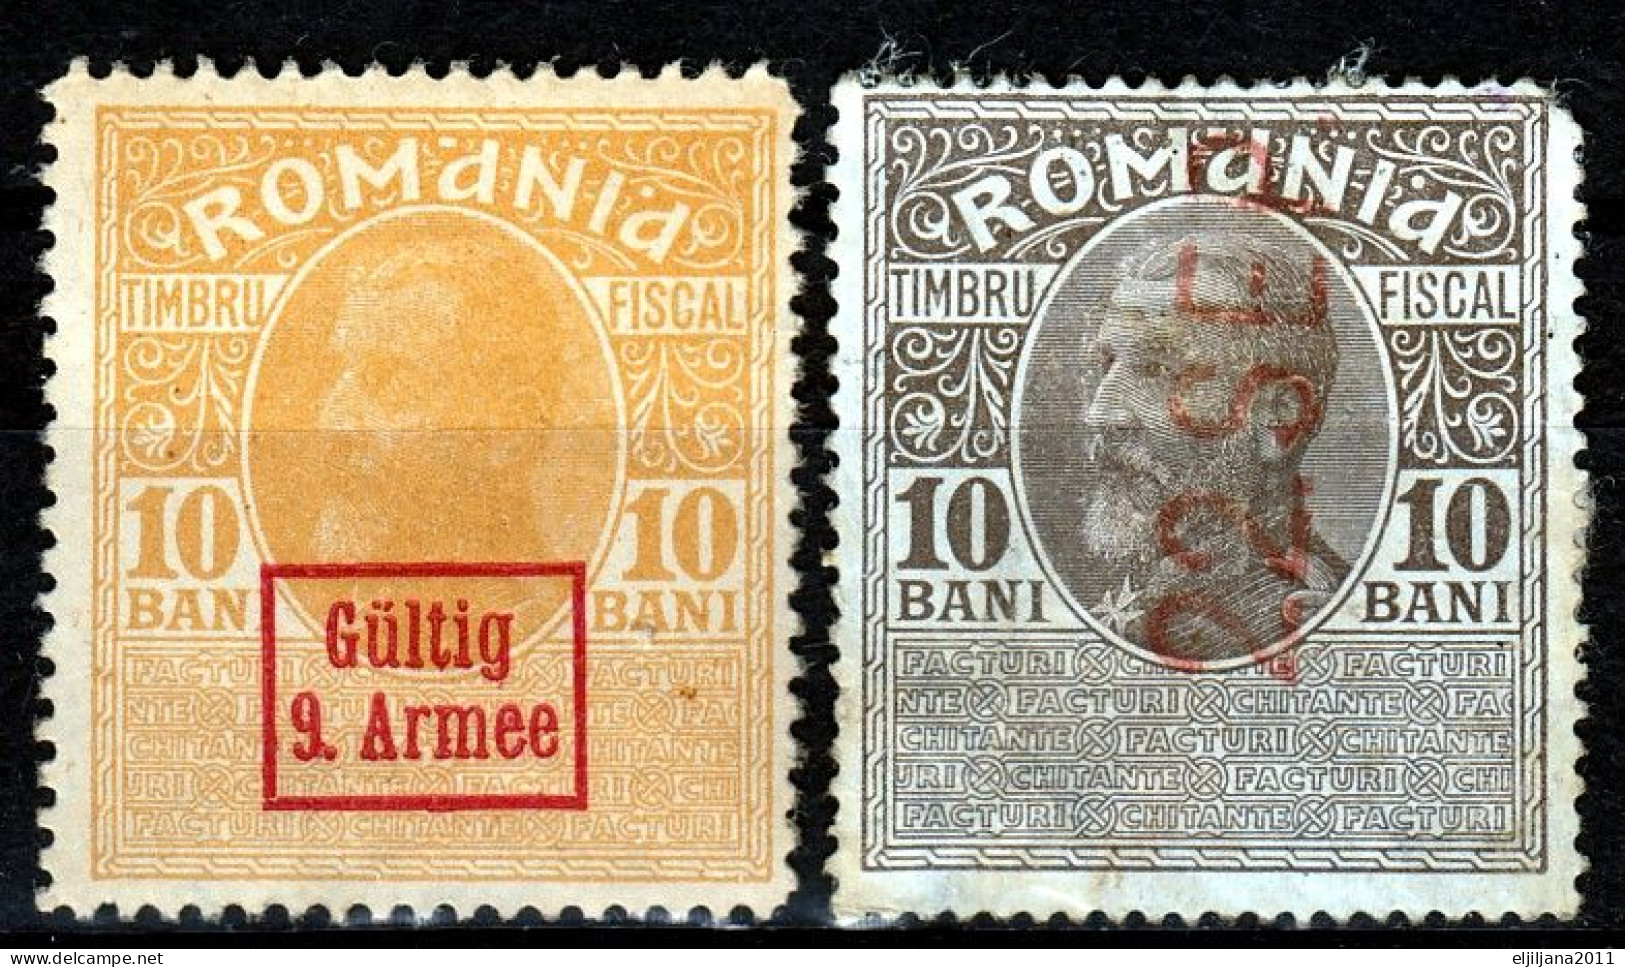 ⁕ Romania 1917 - 1918 Rumänien WWI ⁕ German Occupation "Gültig 9. Armee" Revenue Fiscal Tax Timbru 10 Bani ⁕ 2v MNH & MH - Occupazione